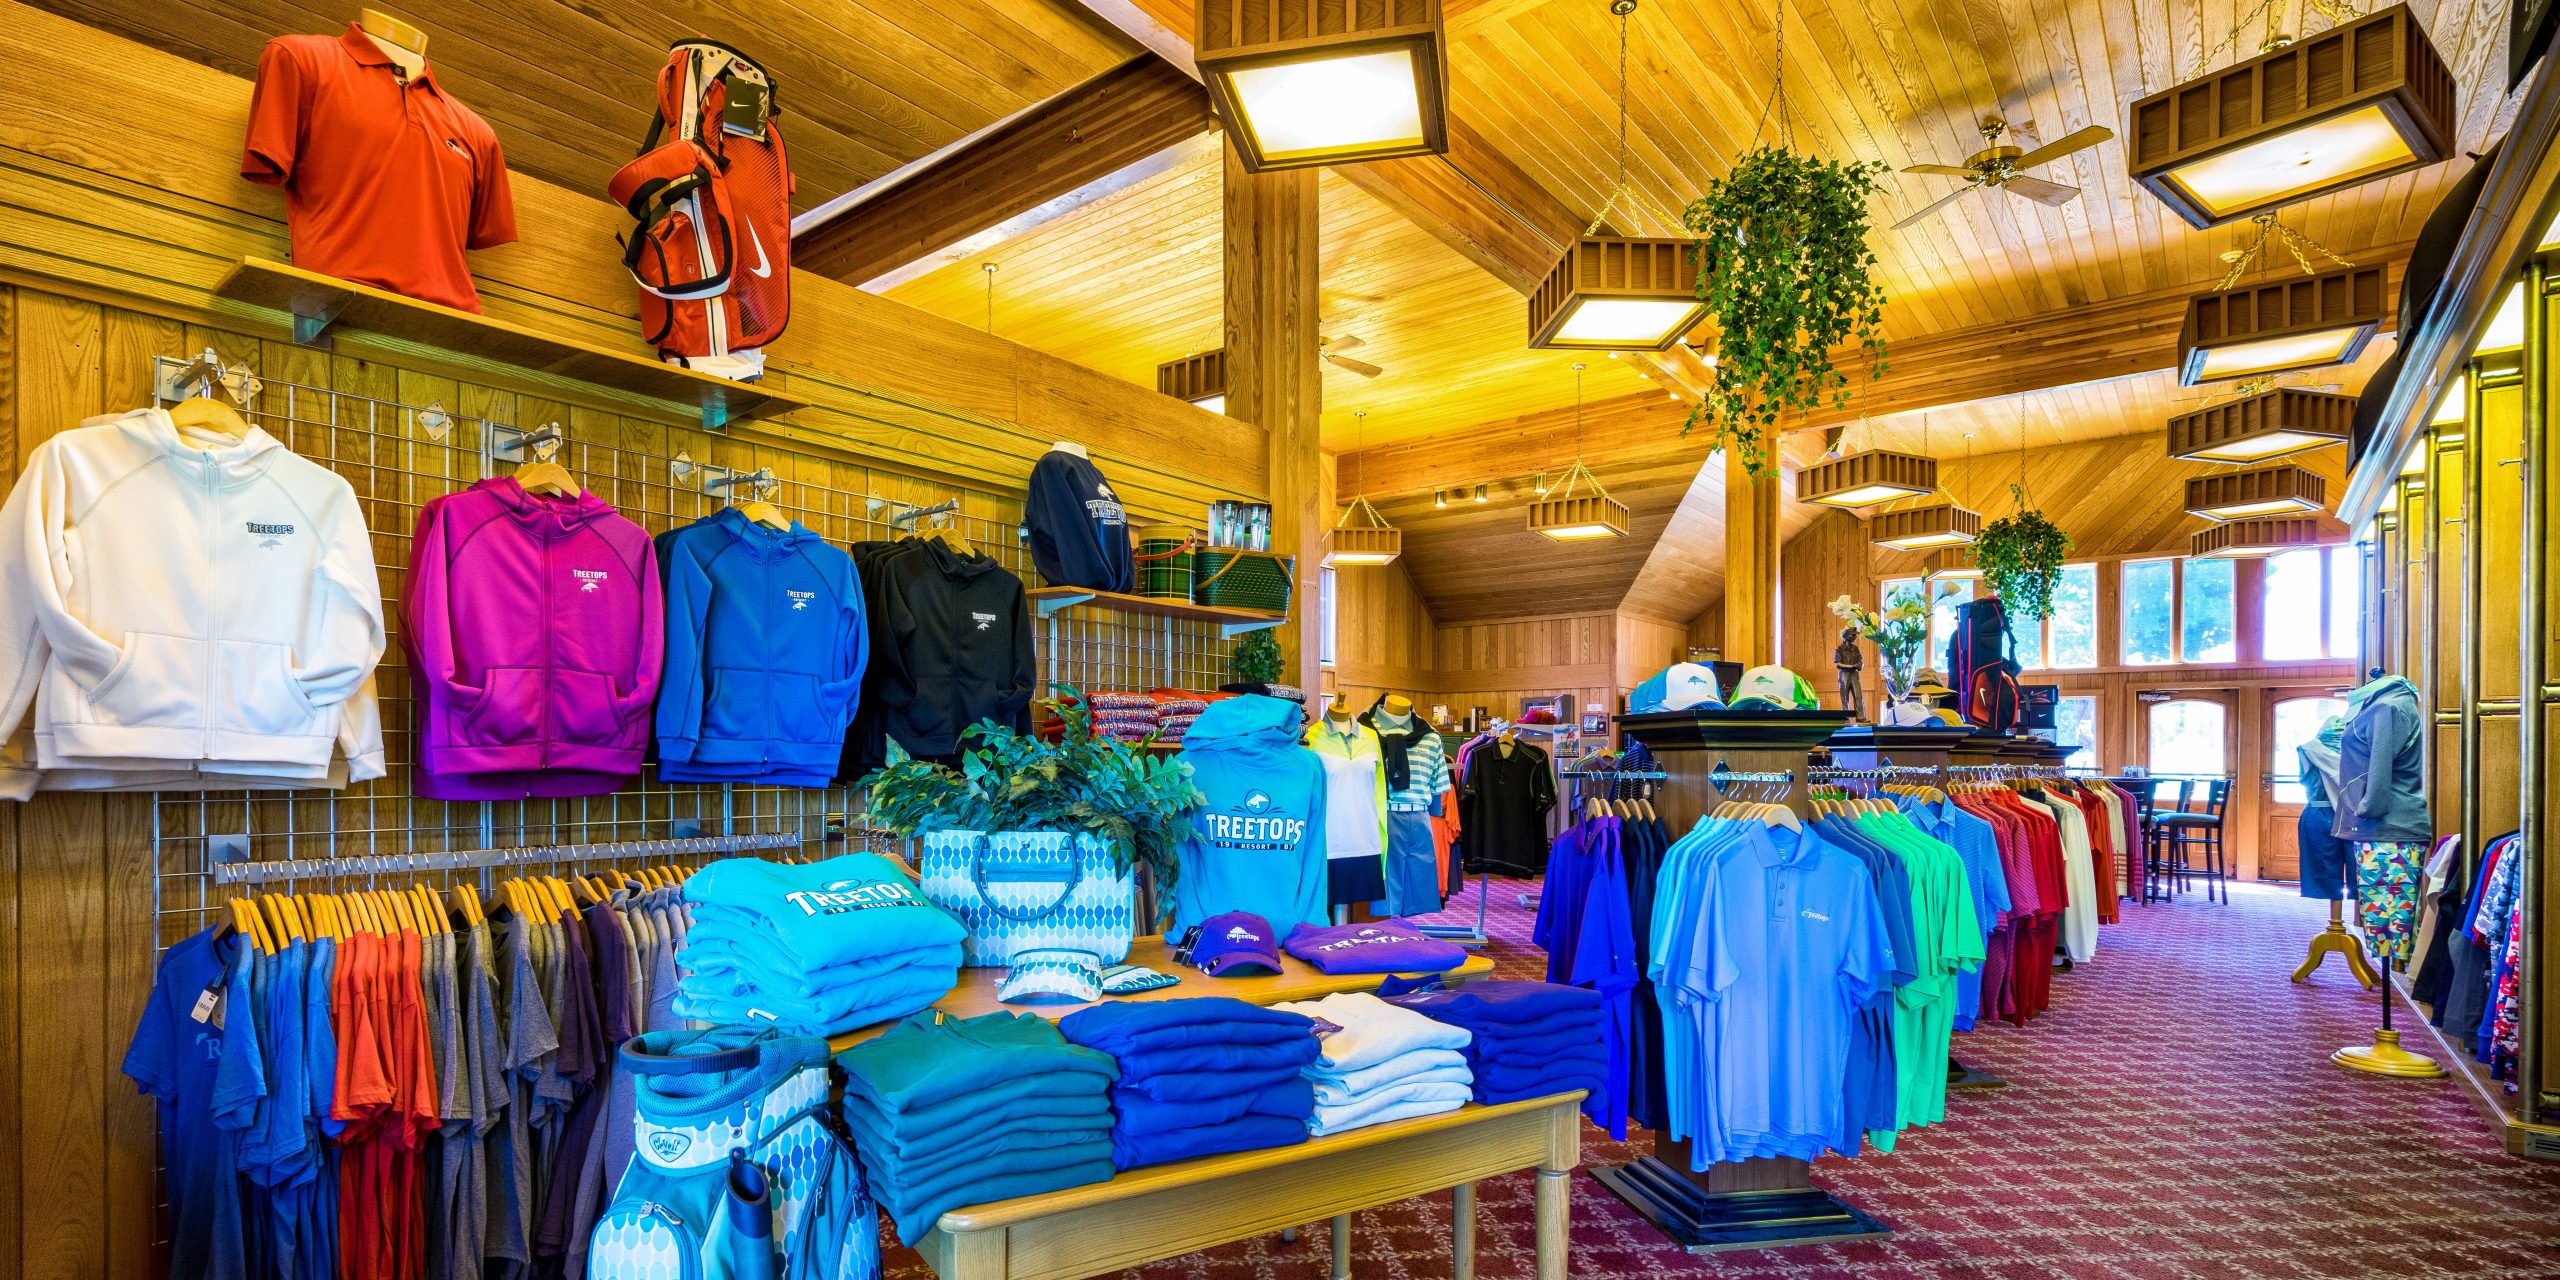 Polo shirts, sweatshirts, golf bags, and more on display at the Jones Pro Shop at Treetops Resort.